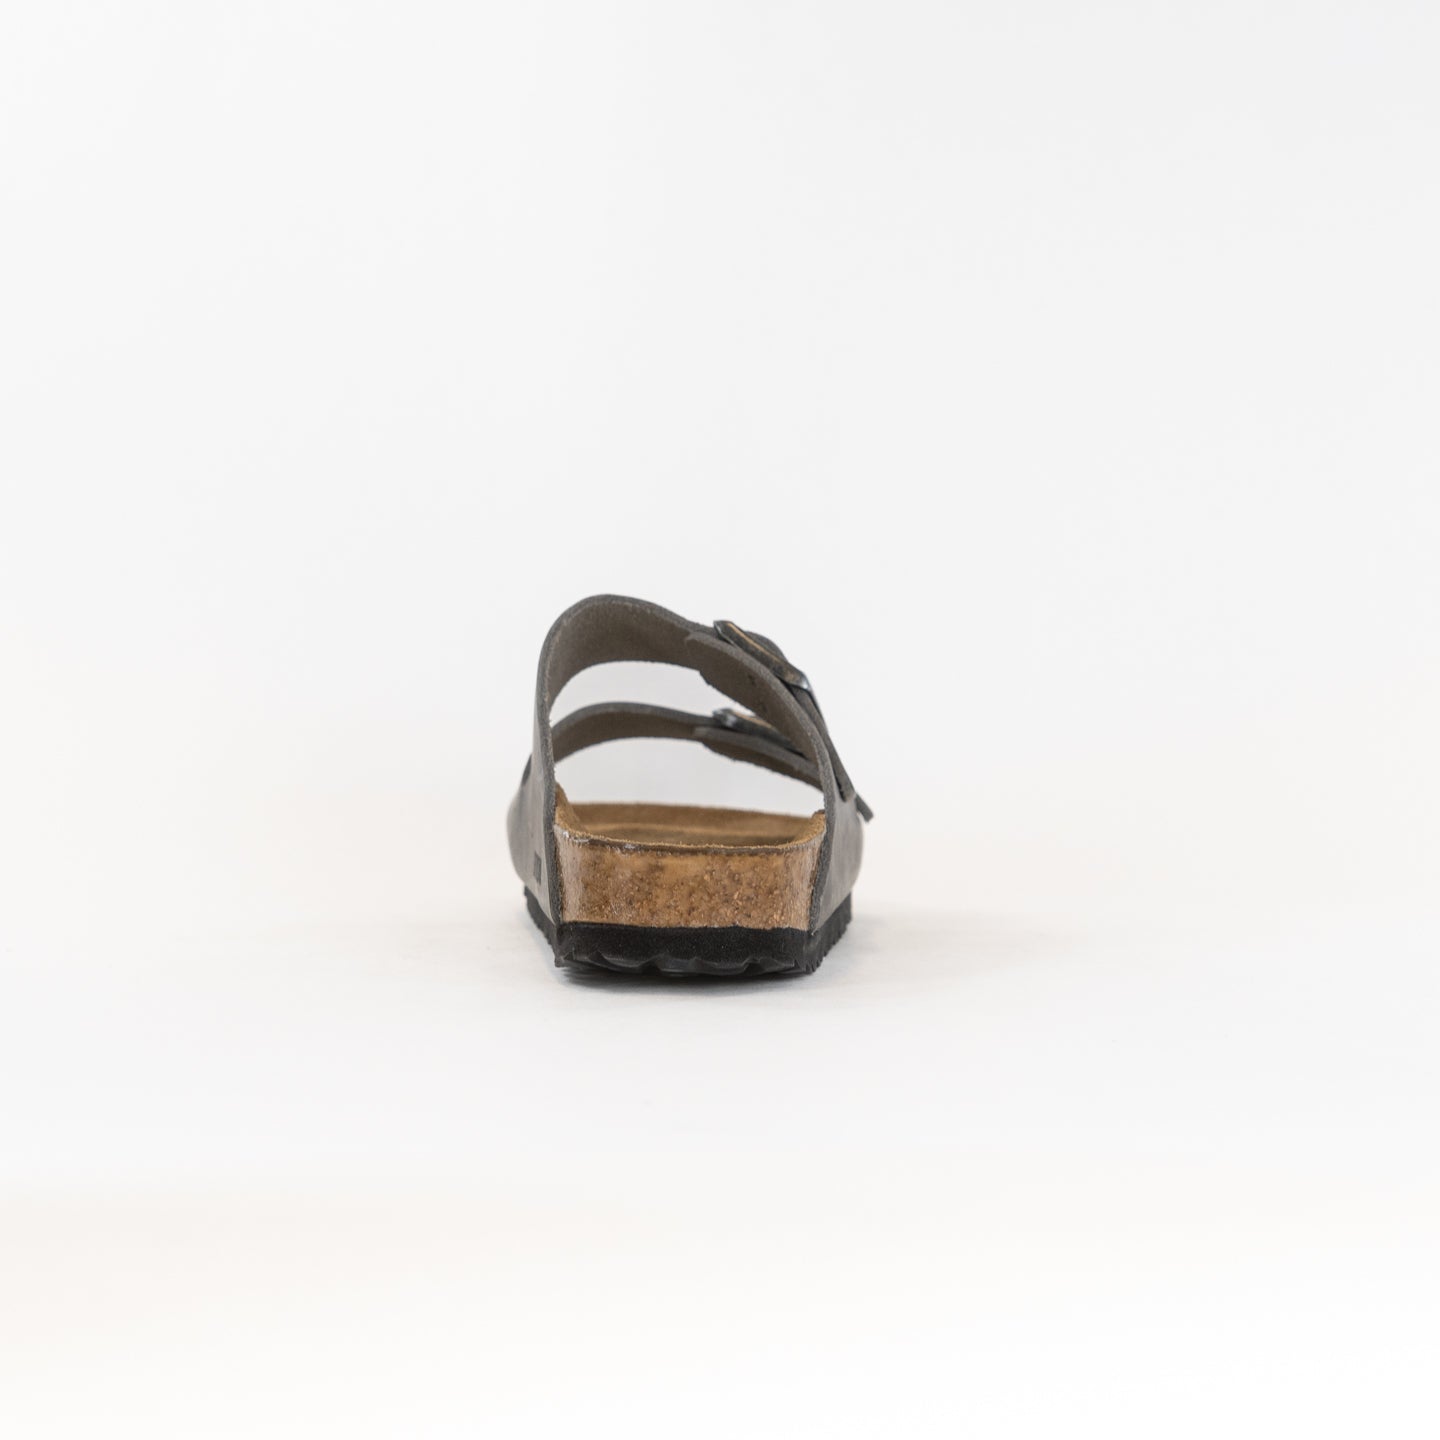 Birkenstock Arizona Soft Footbed (Women's) - Iron Oiled Leather